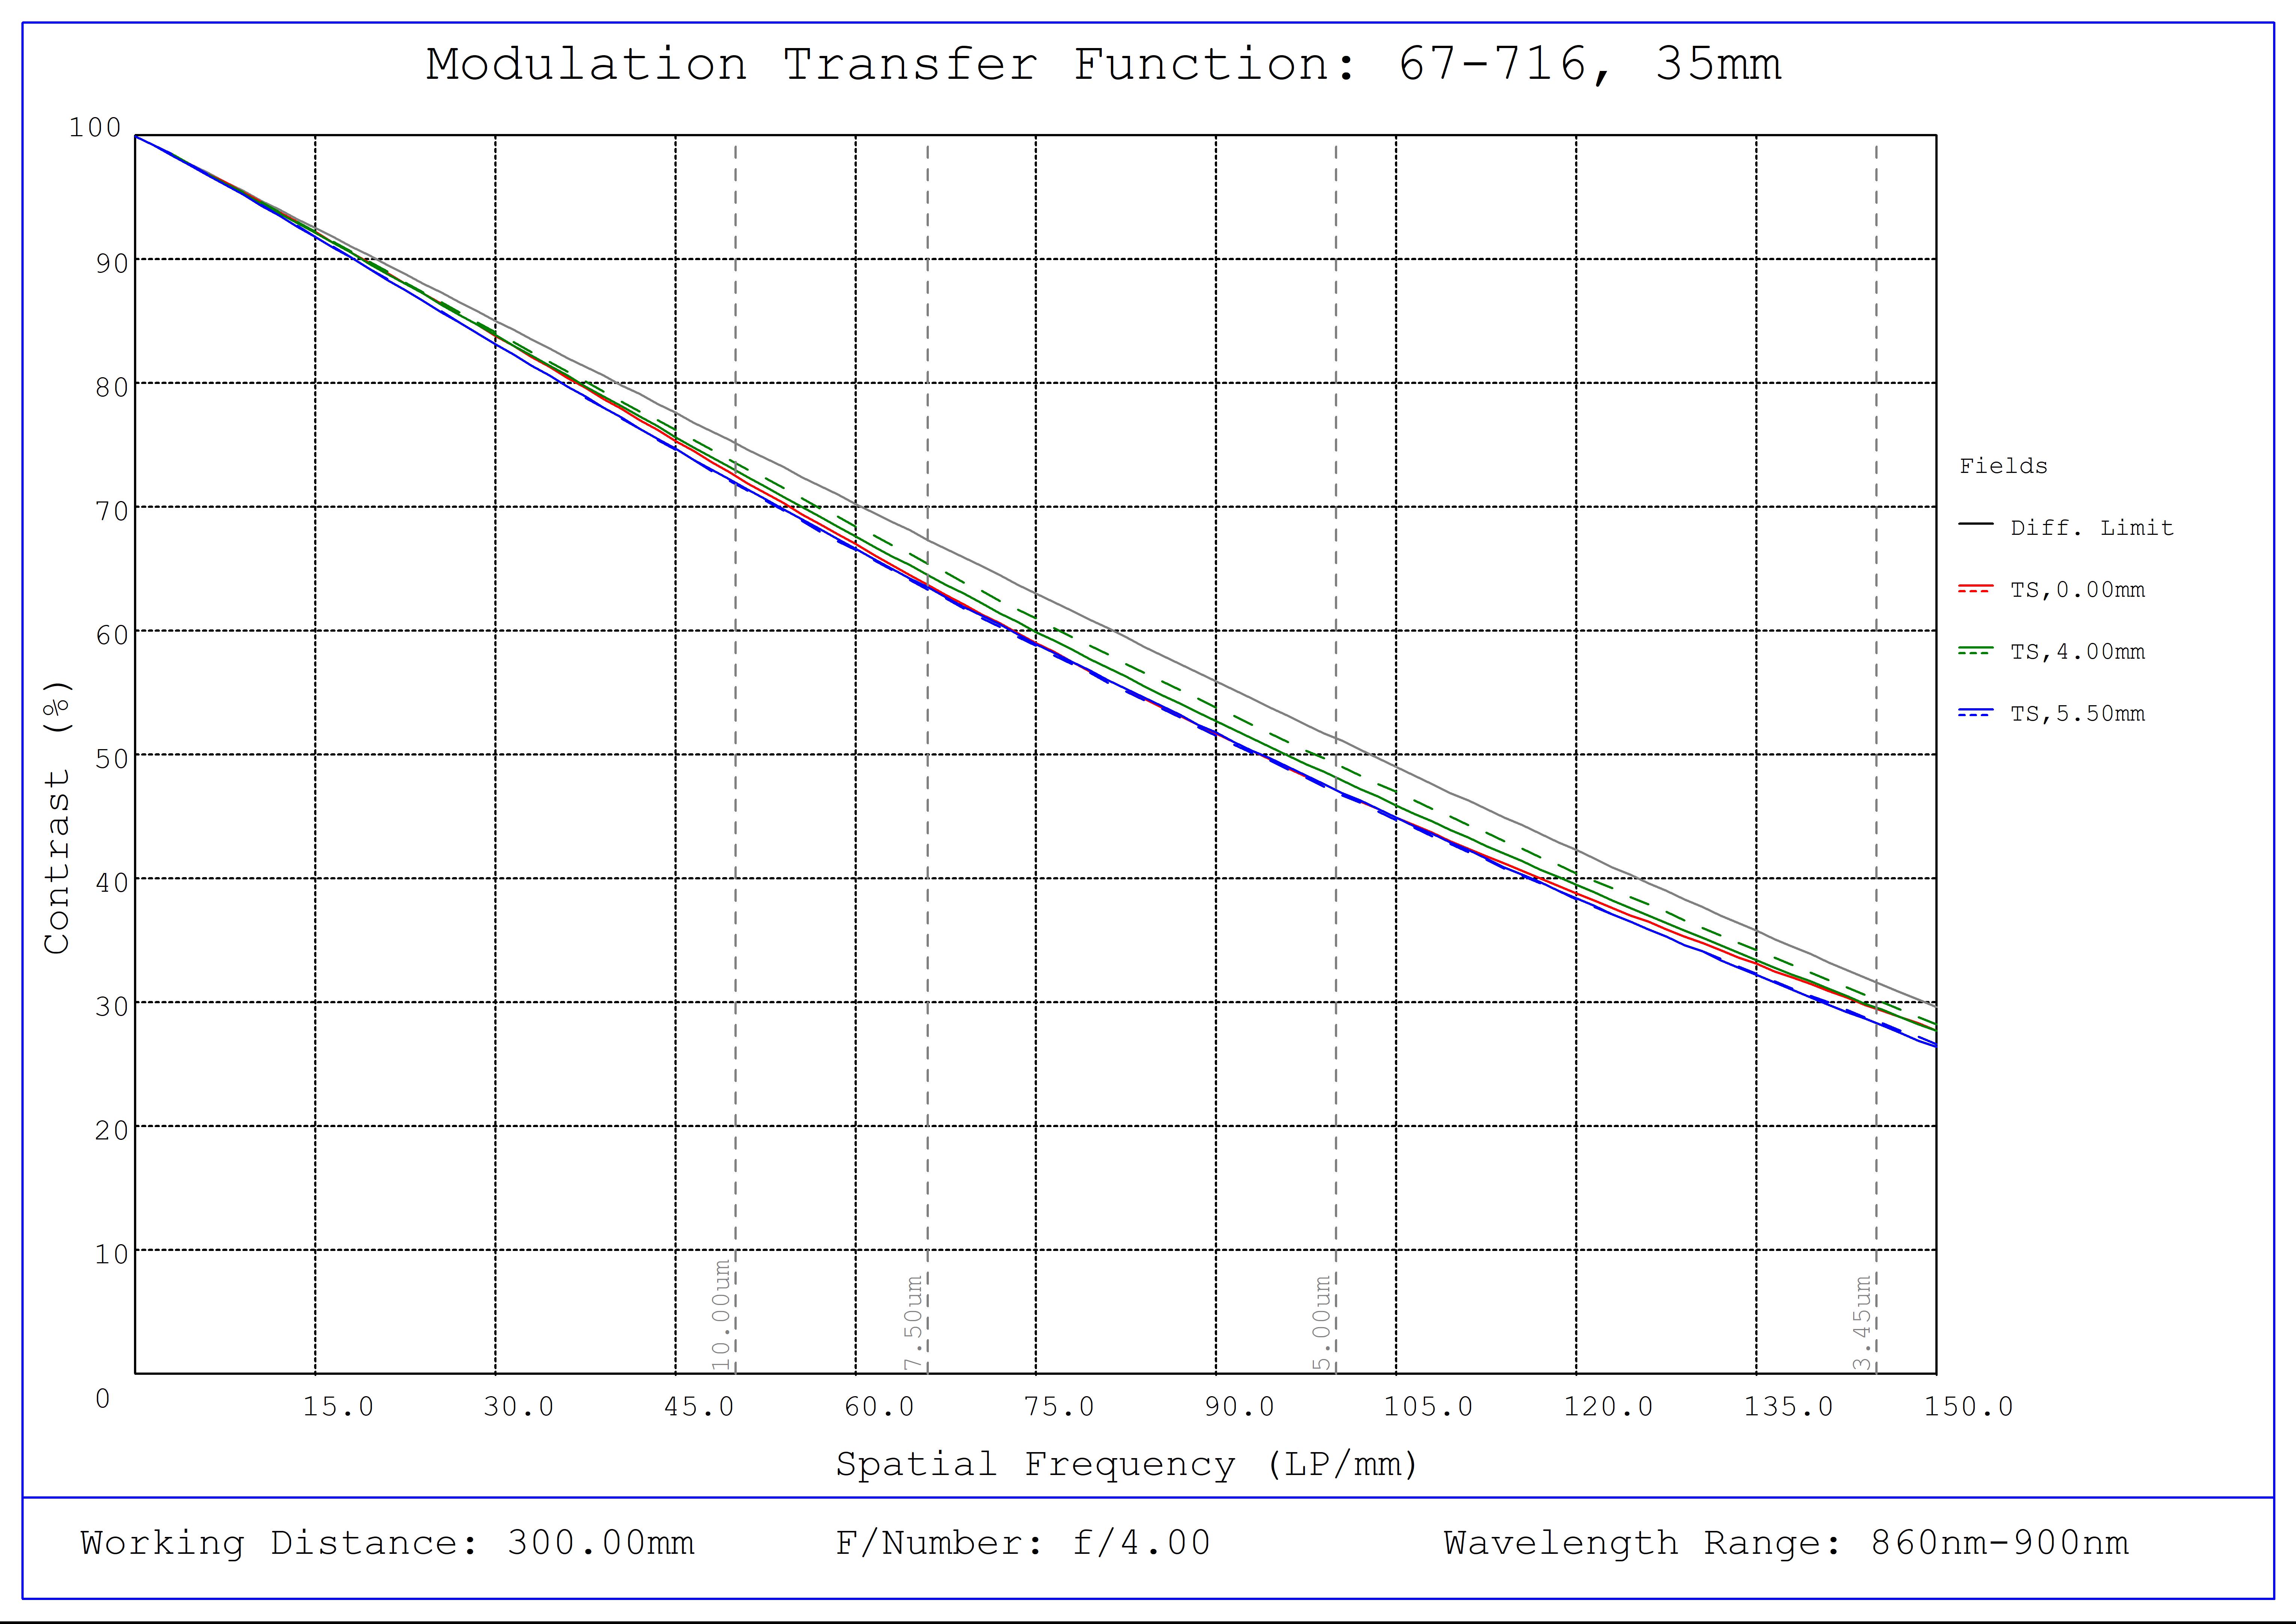 #67-716, 35mm C VIS-NIR Series Fixed Focal Length Lens, Modulated Transfer Function (MTF) Plot (NIR), 300mm Working Distance, f4